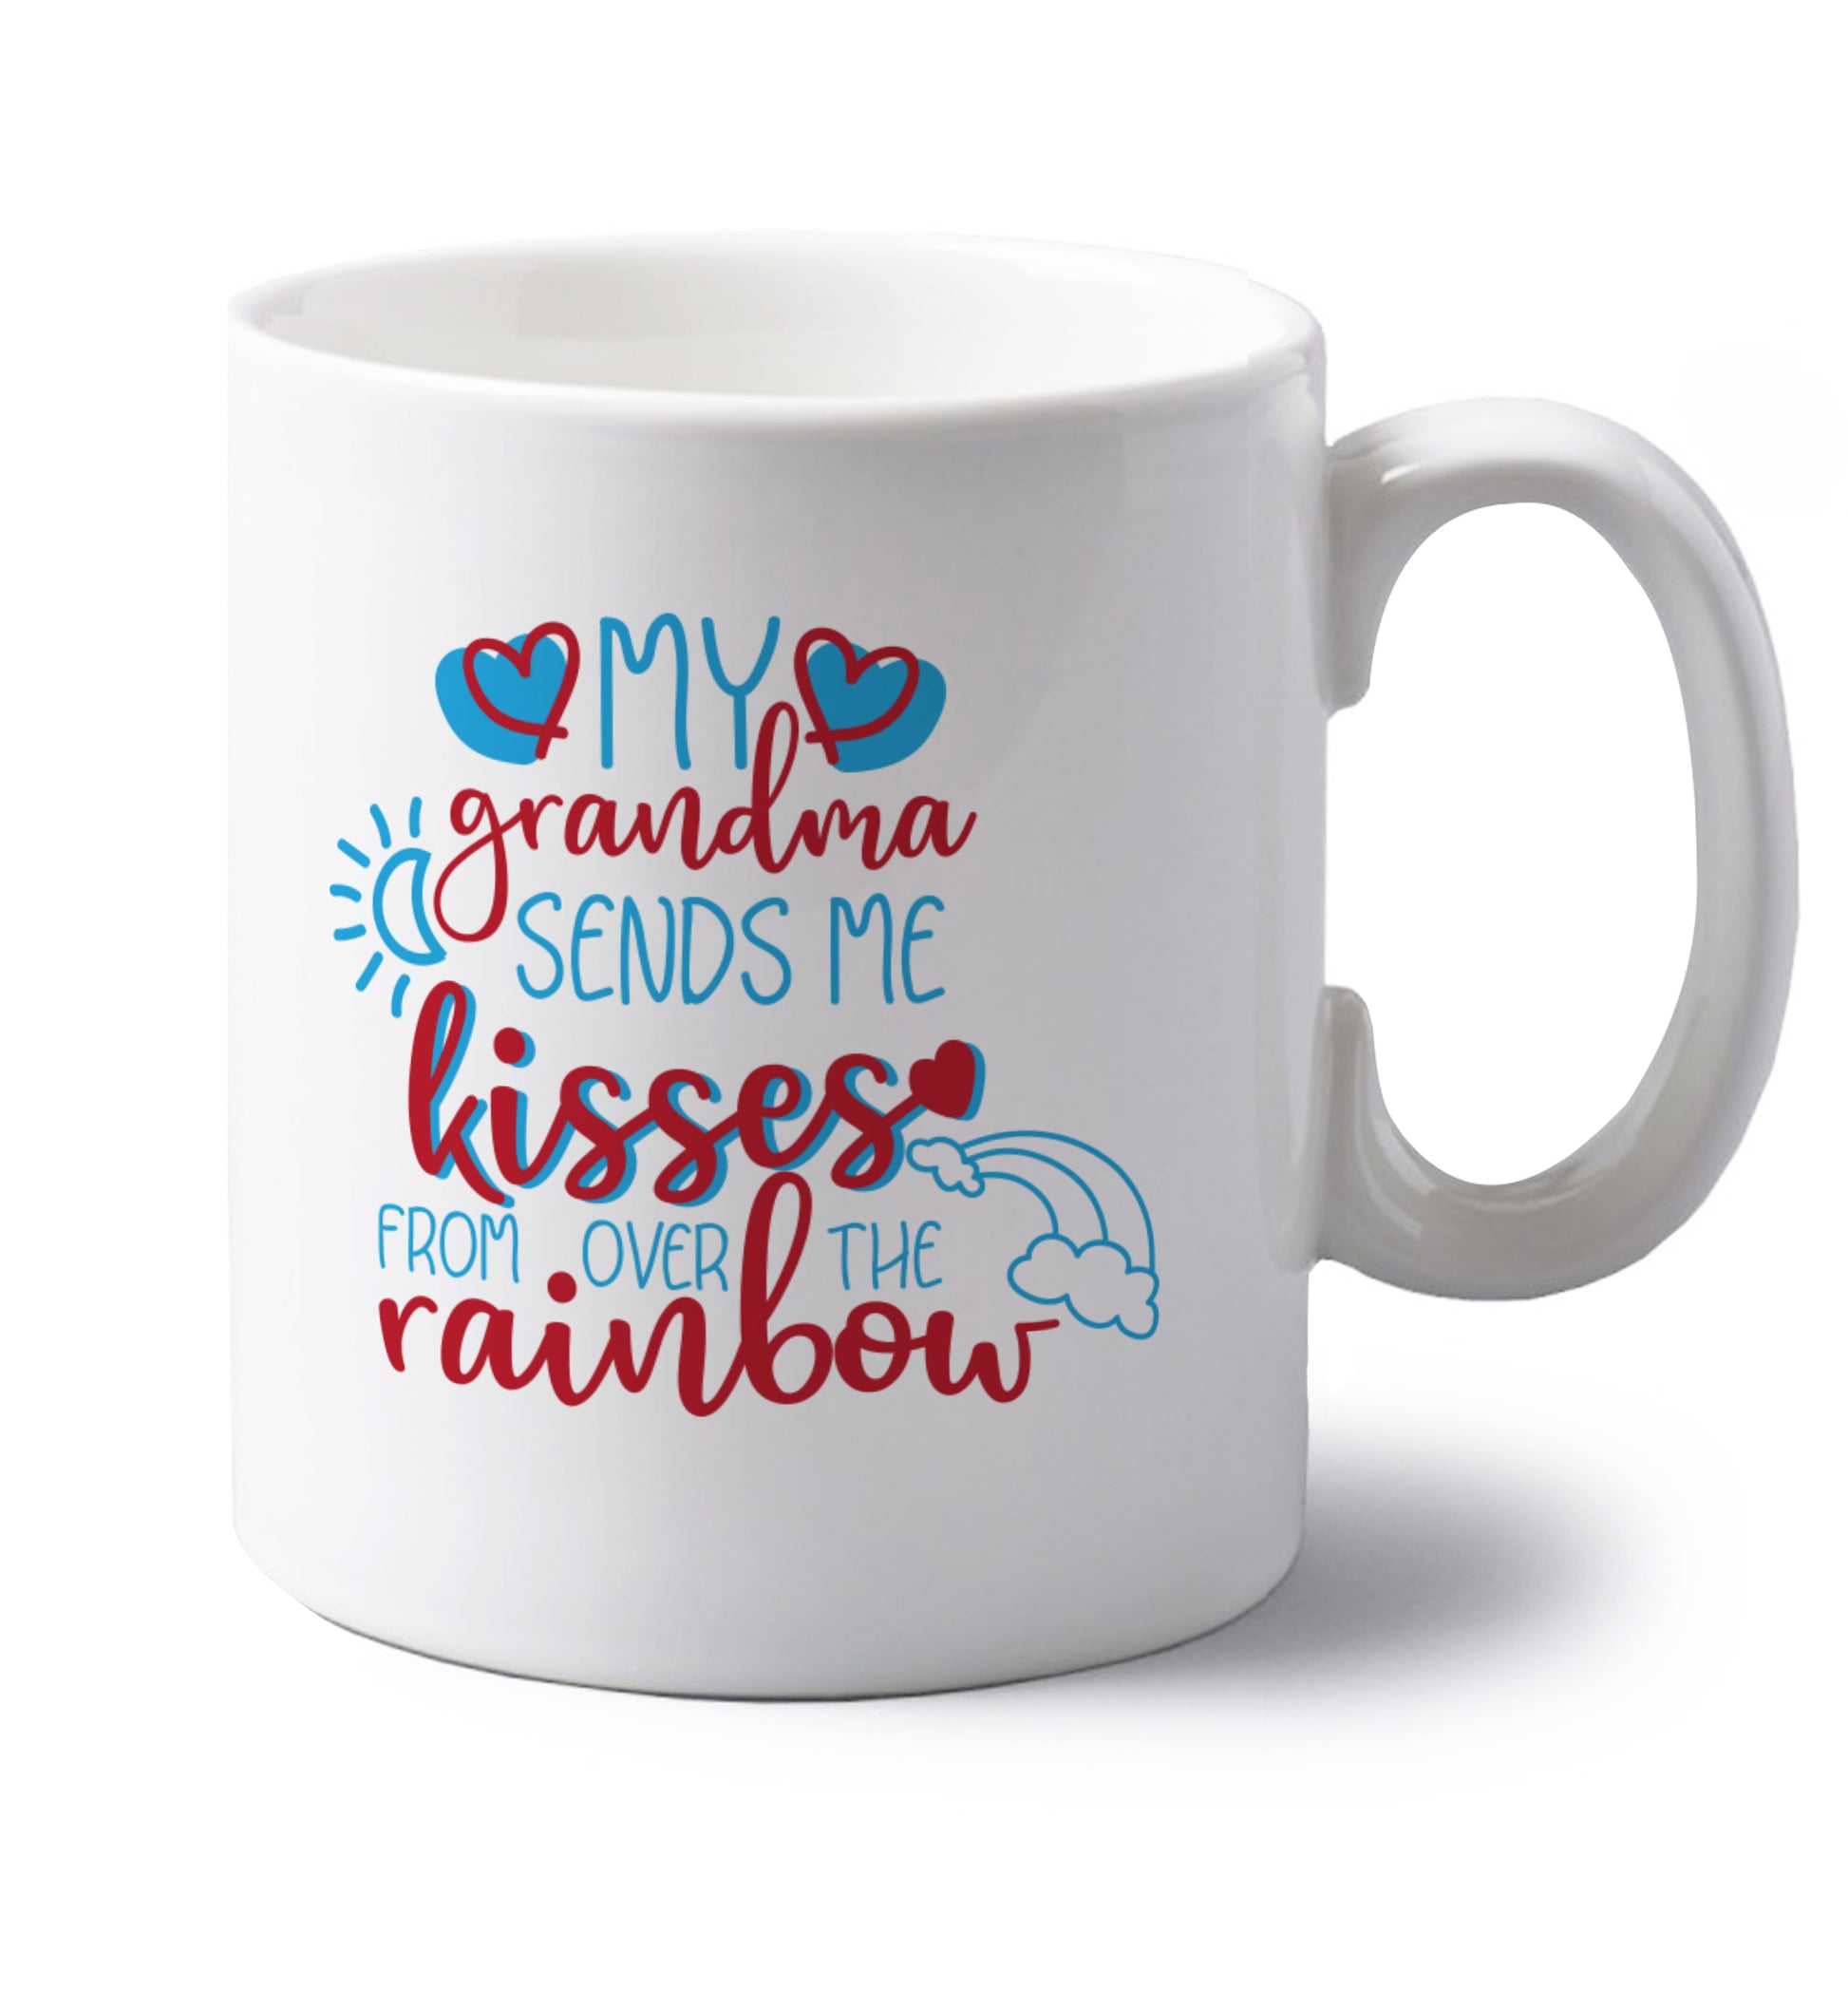 My grandma sends me kisses from over the rainbow left handed white ceramic mug 